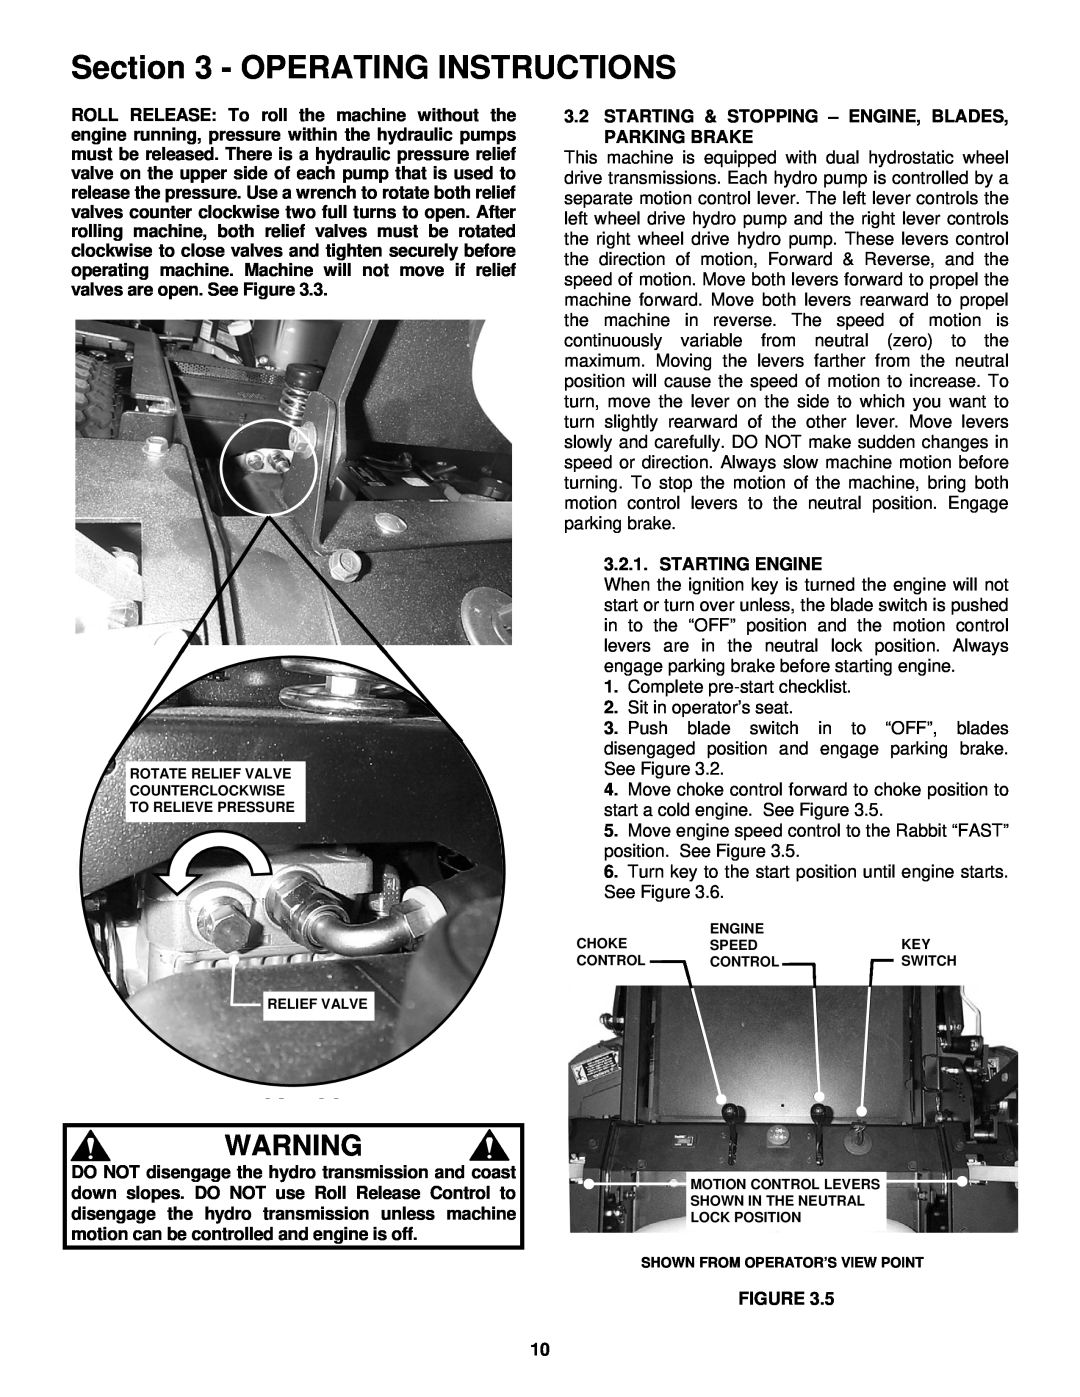 Snapper NZM19481KWV Operating Instructions, Starting & Stopping - Engine, Blades, Parking Brake, Starting Engine 